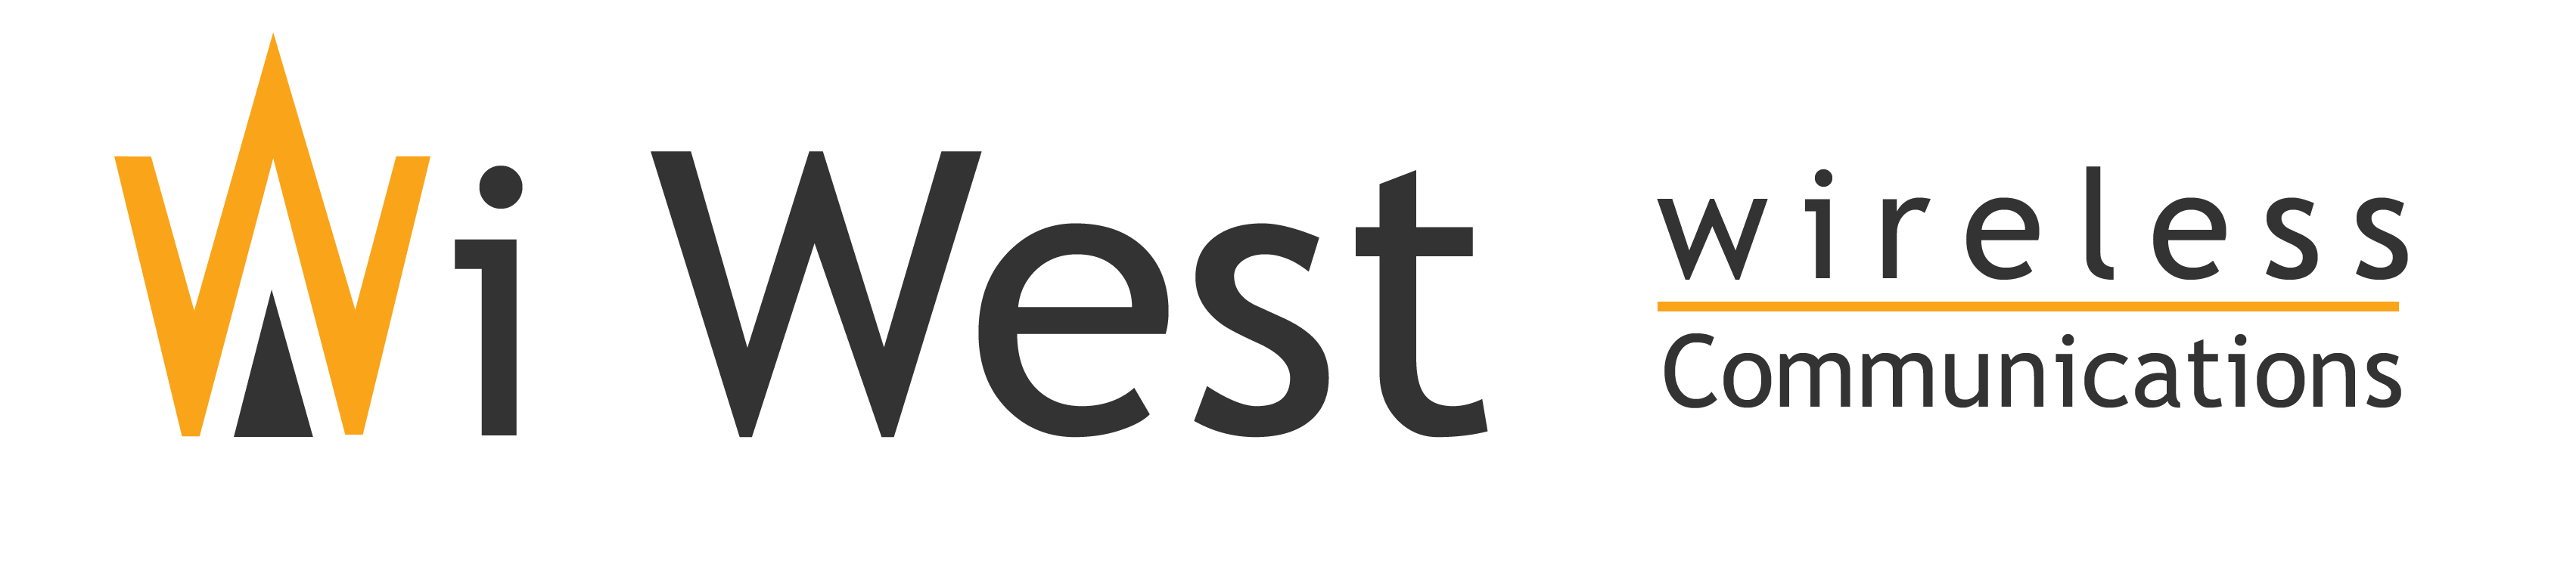 Wireless Communications Logo - Wi West Wireless Communications Logo > Wi West Wireless Repair